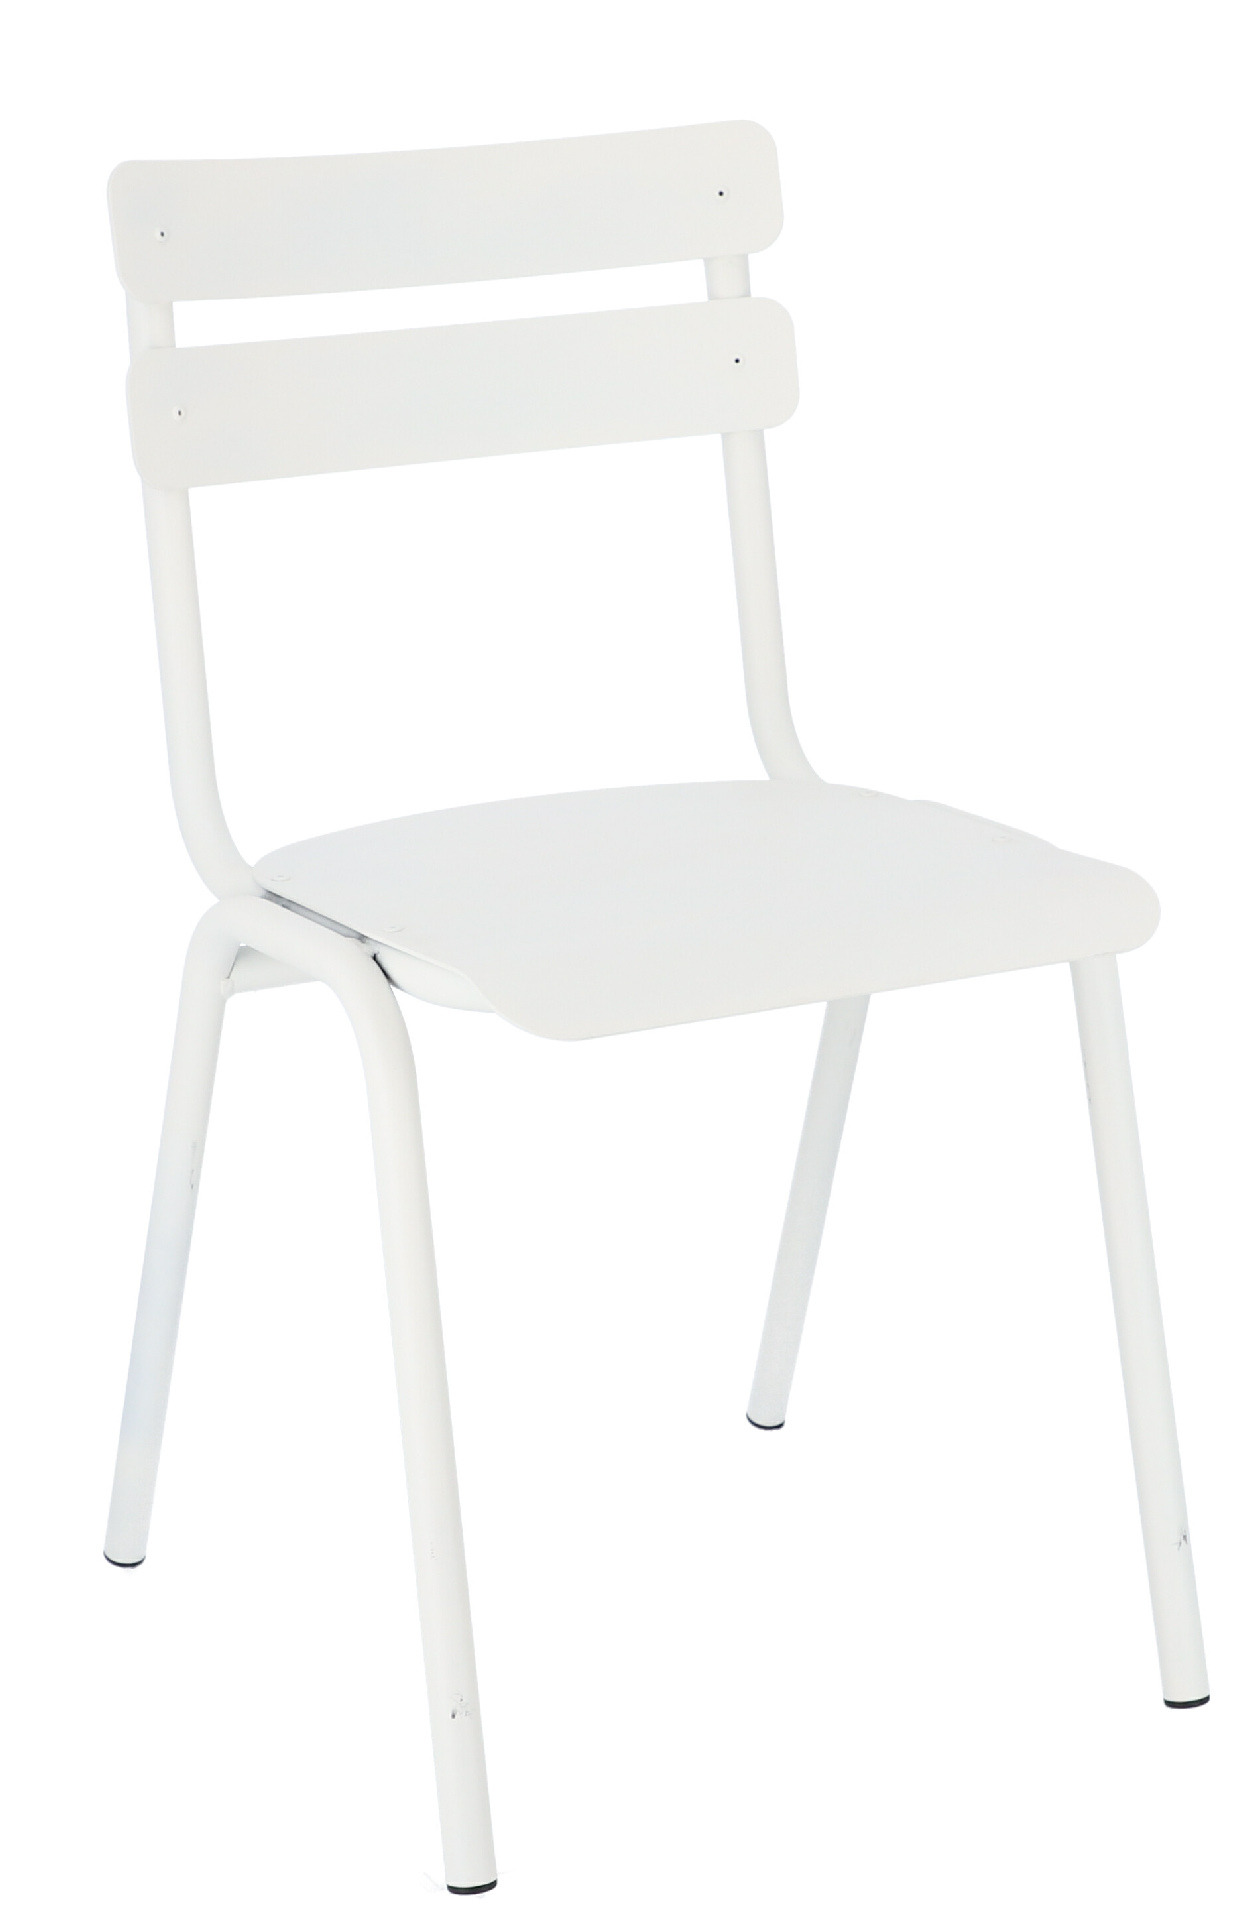 stapelbar, aus | Stuhl Weiß One F710042601 Aluminium, Weiß |